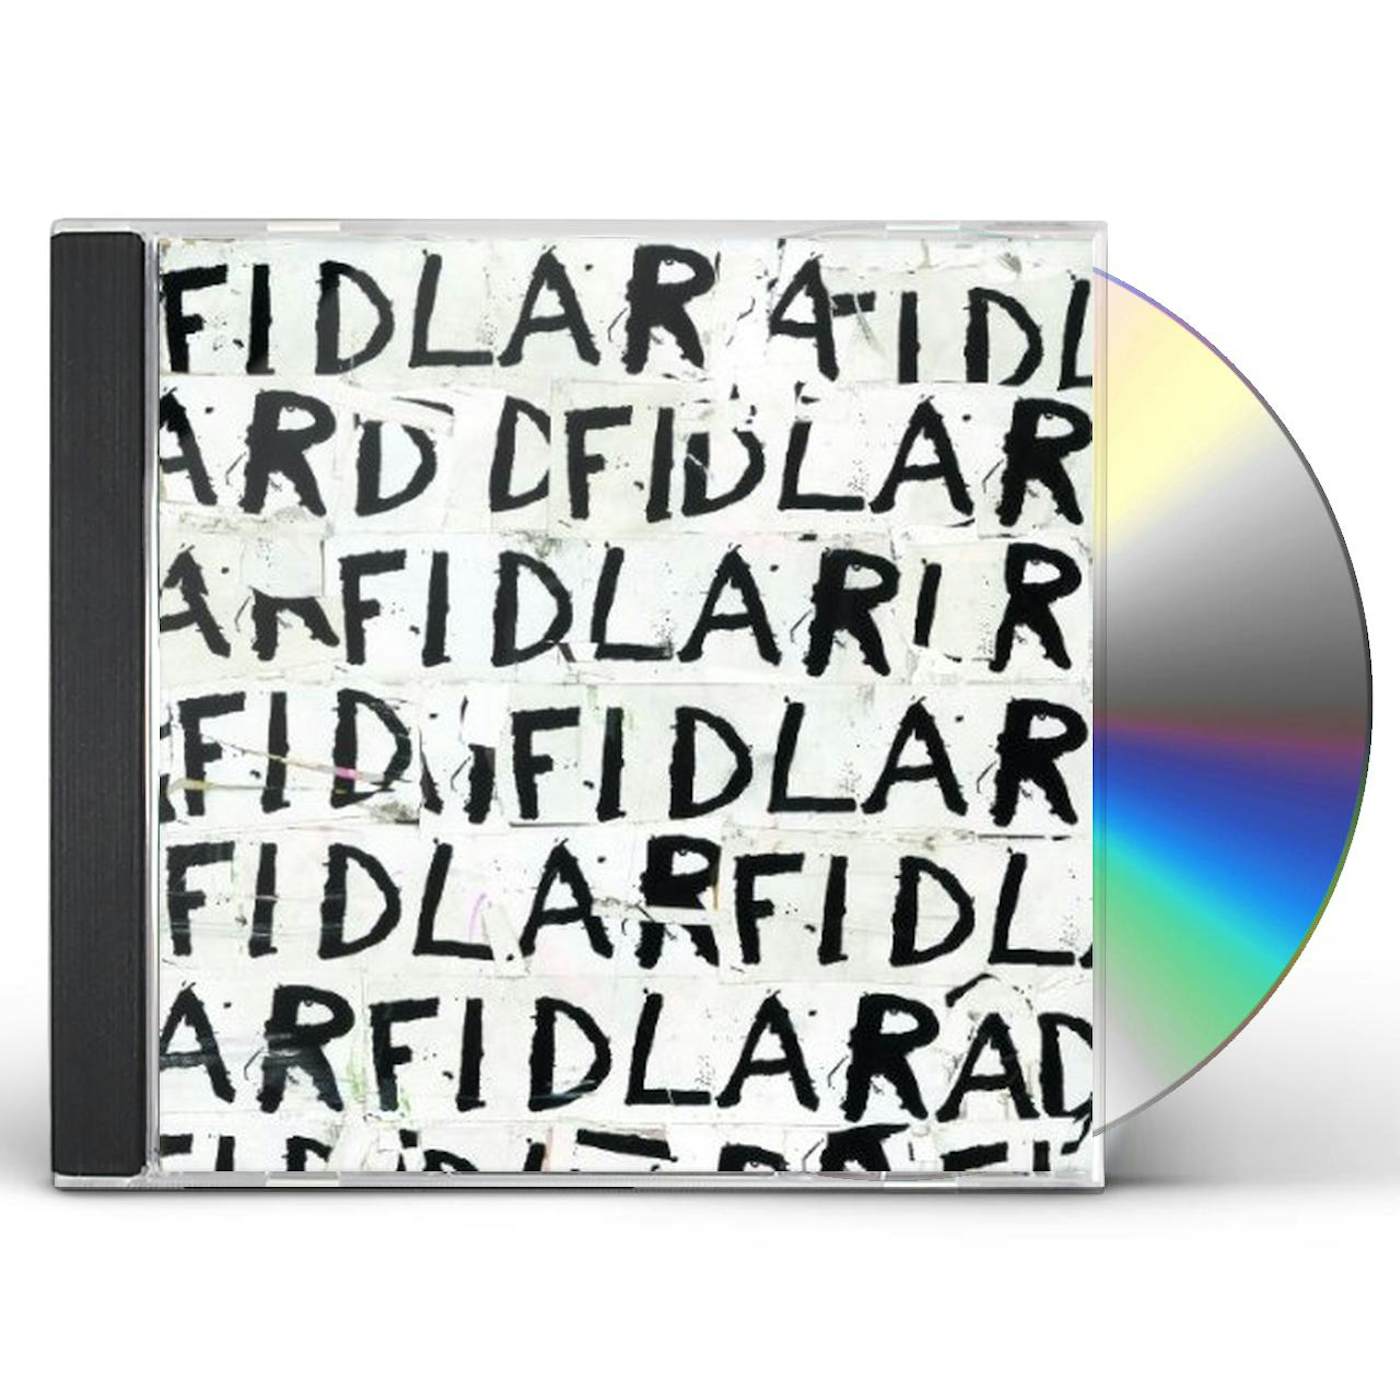 FIDLAR CD